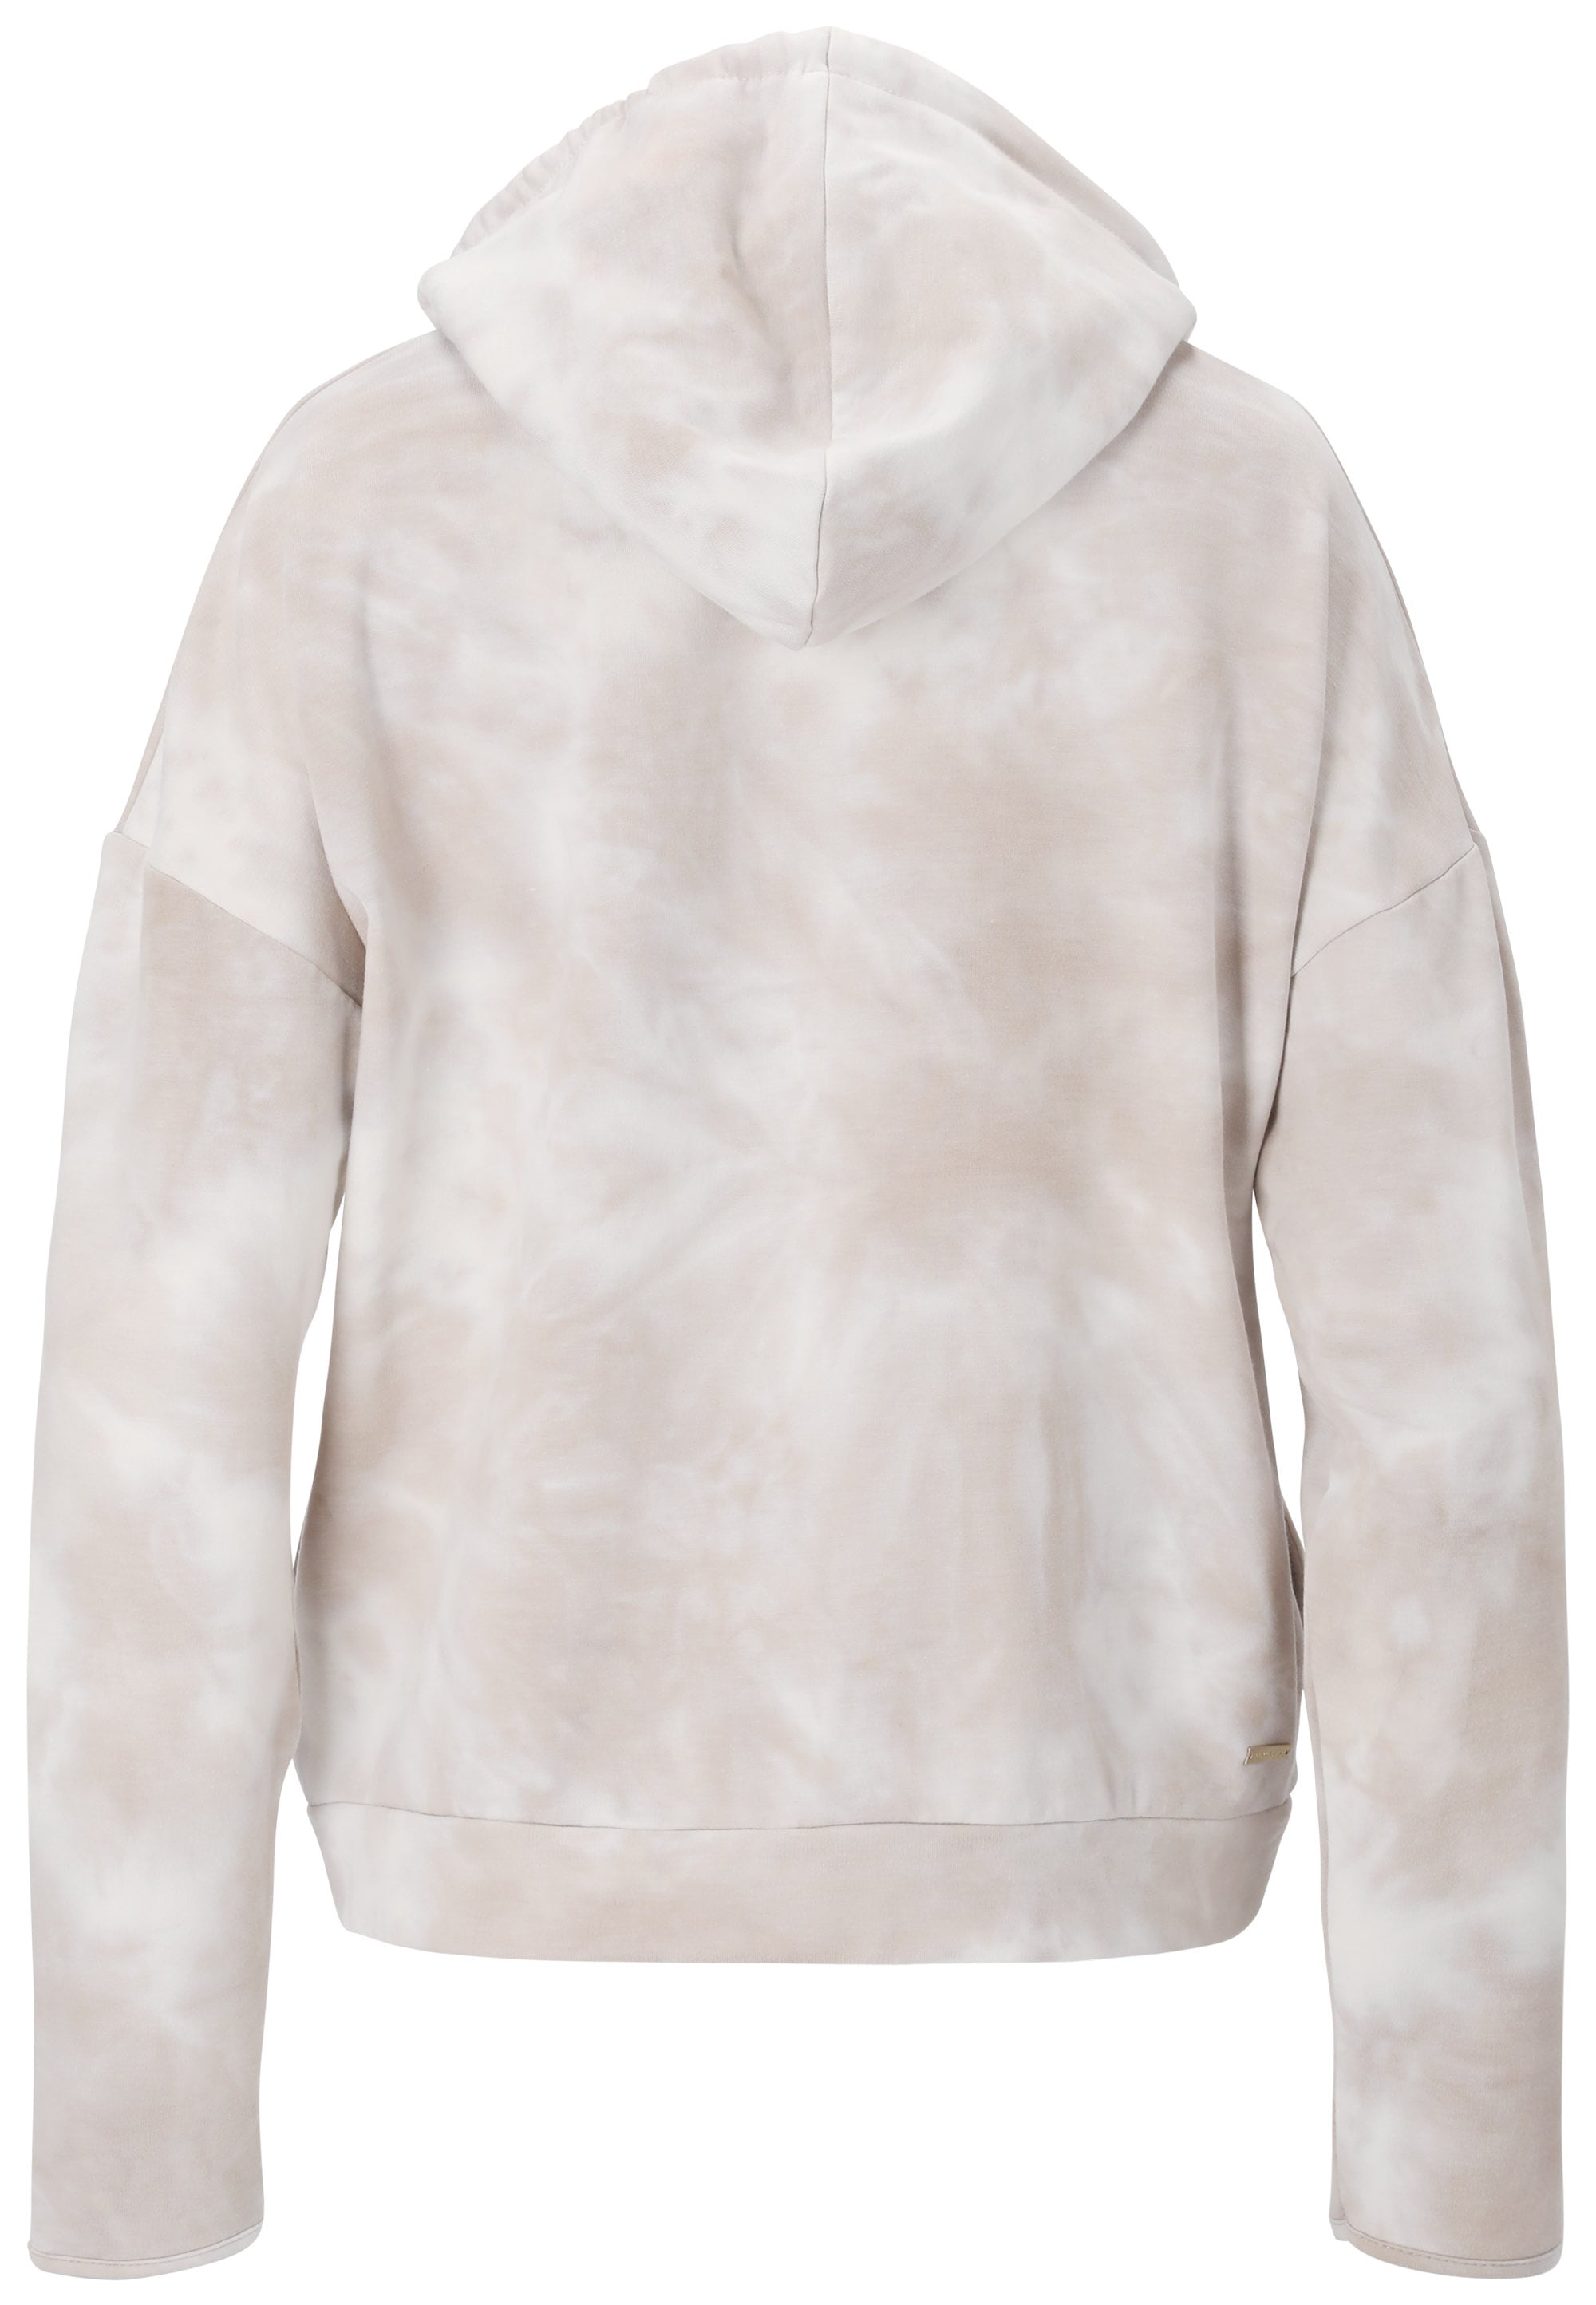 ATHLECIA Sweatshirt »Reisalin«, mit tollem Marmor-Effekt